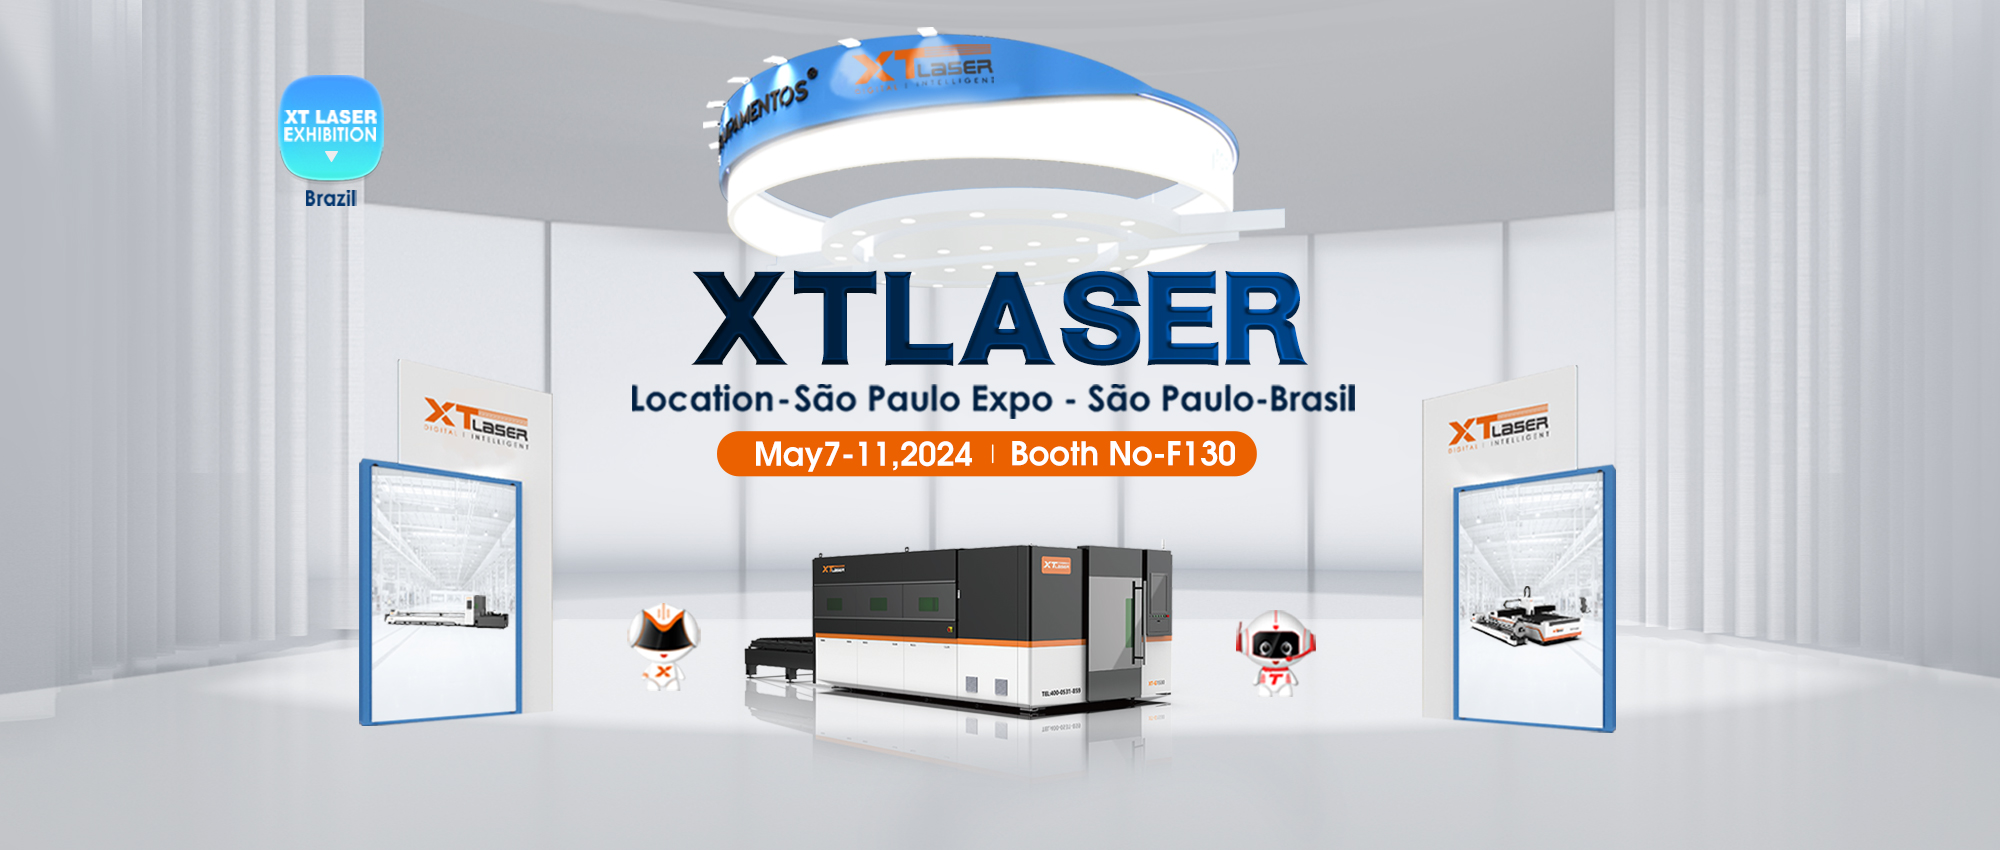 XTlaser Brazil exhibition